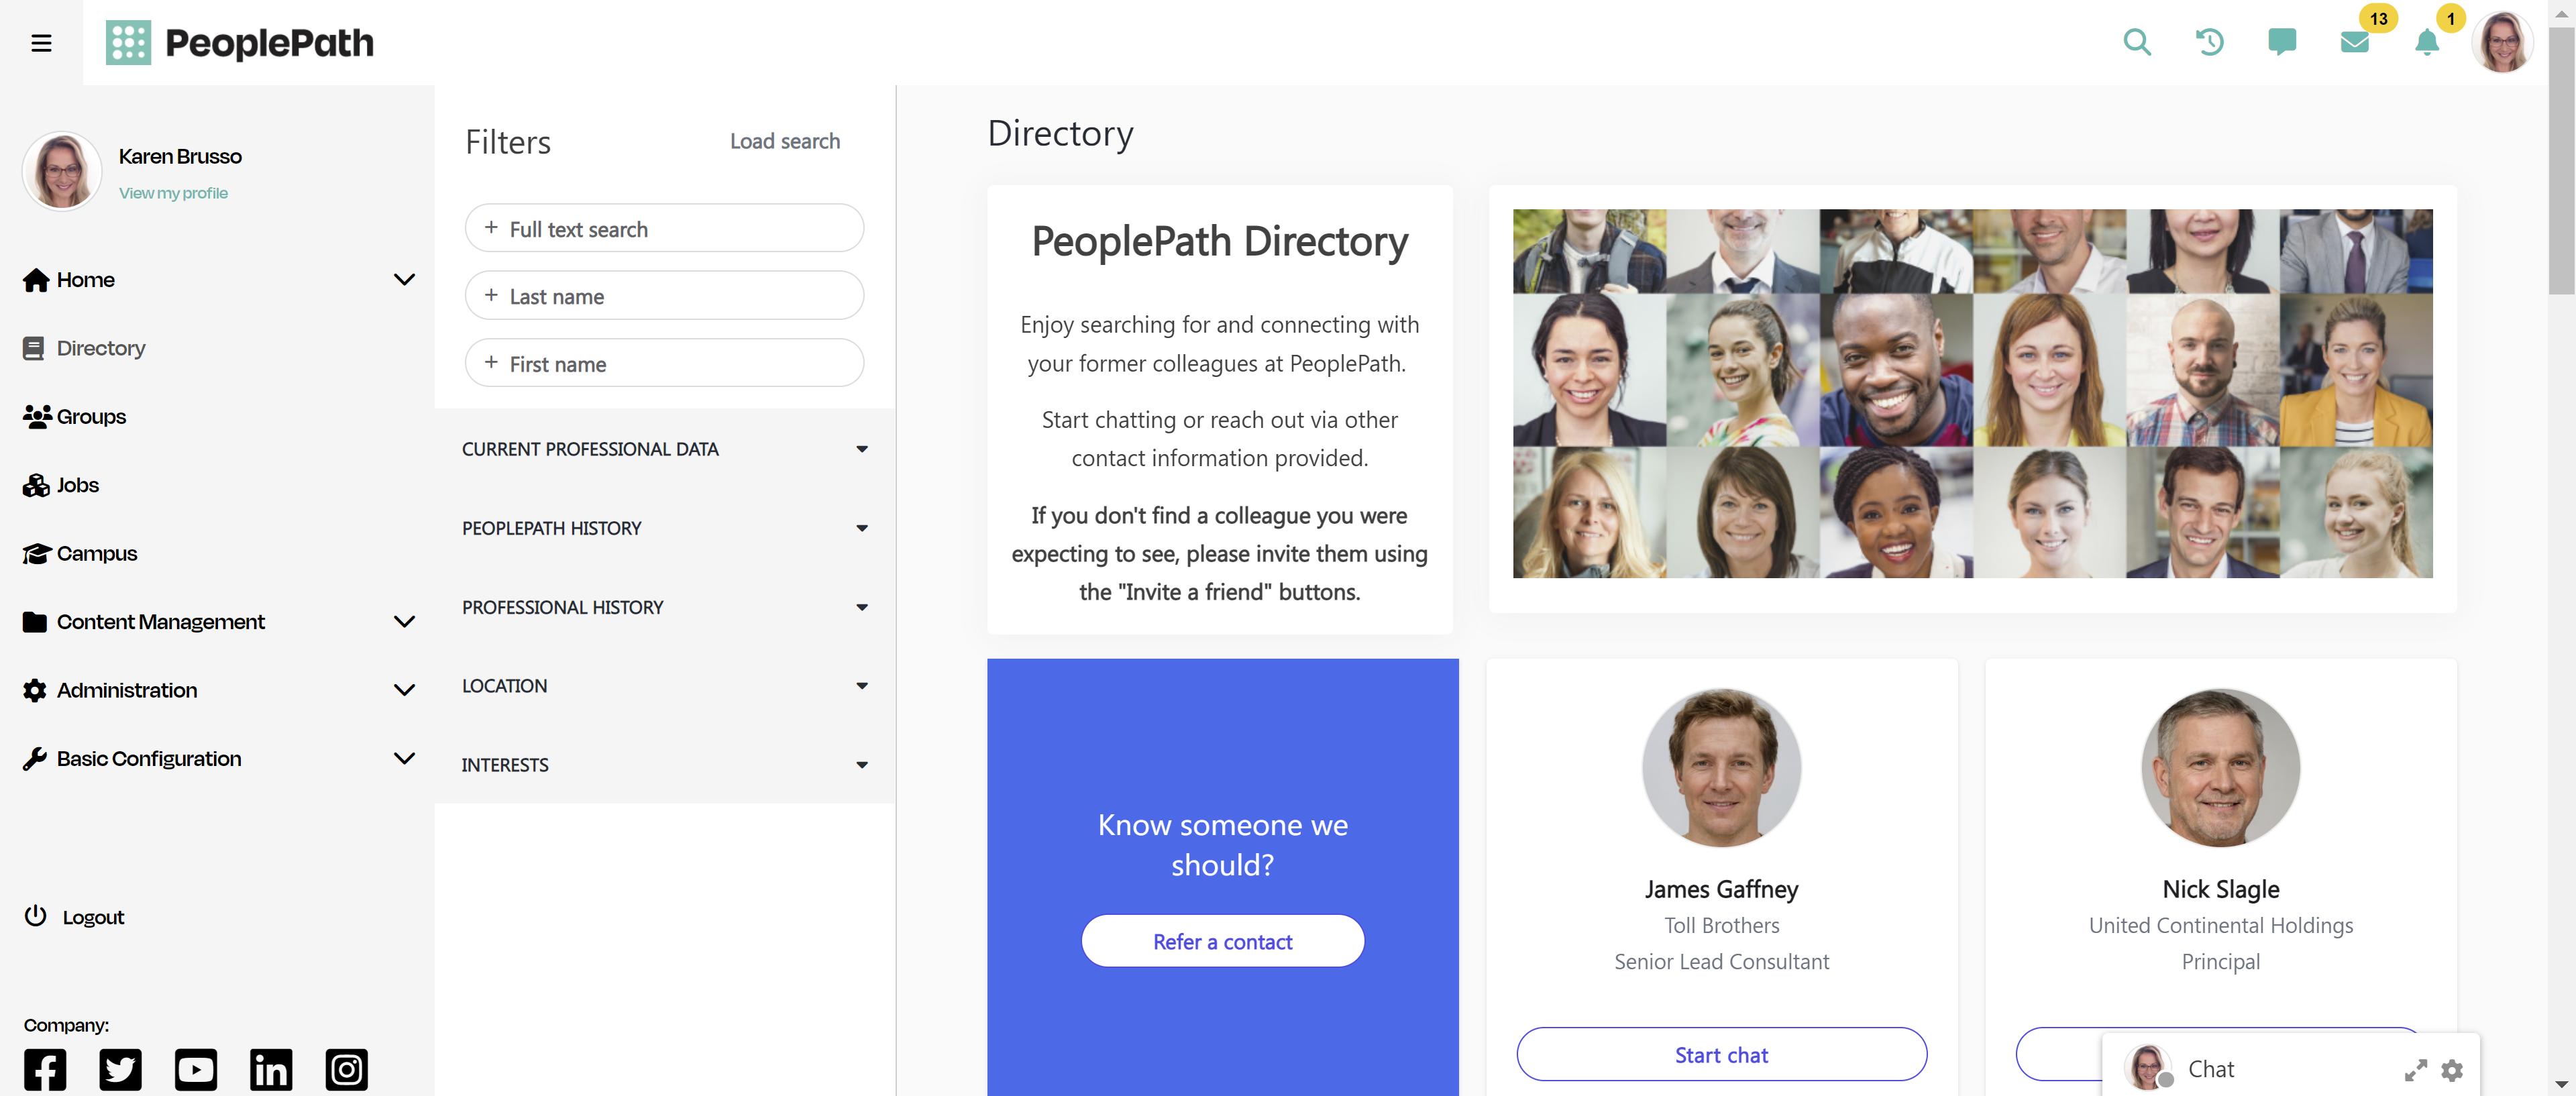 PeoplePath Corporate Alumni Software interface - Directory